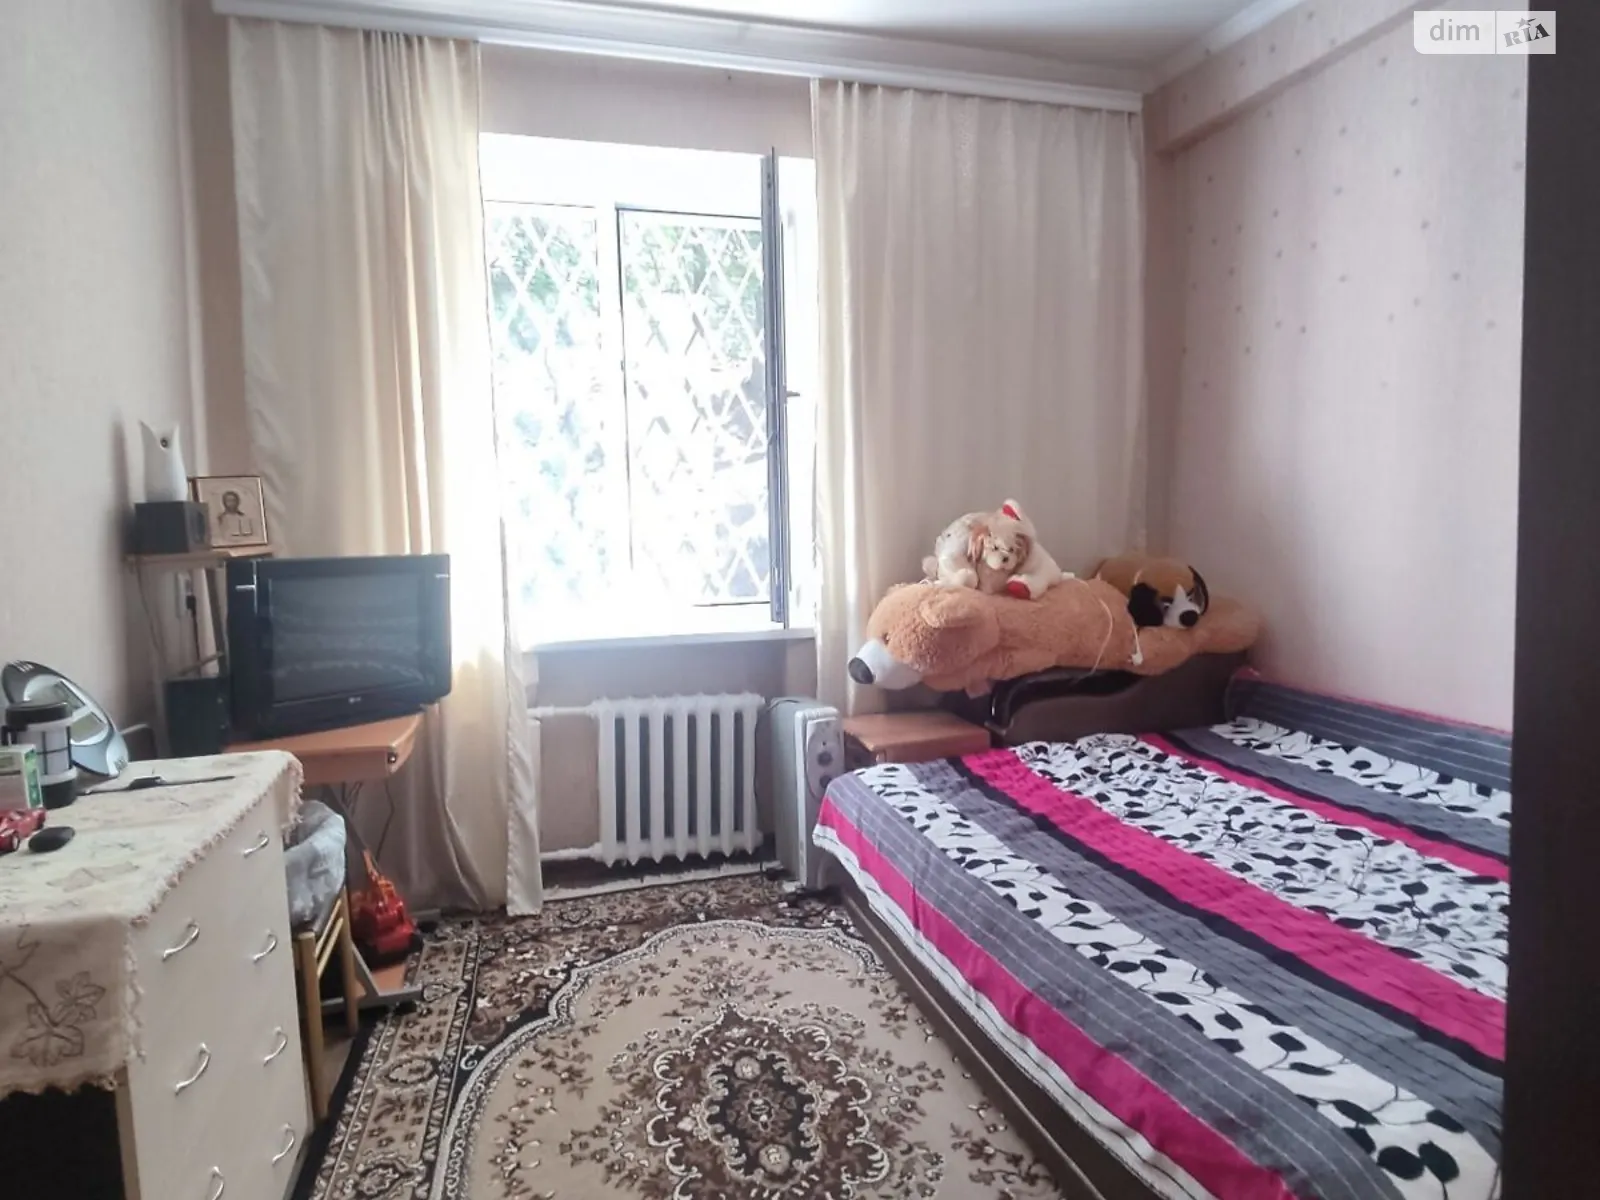 Продается комната 25 кв. м в Киеве, цена: 15000 $ - фото 1